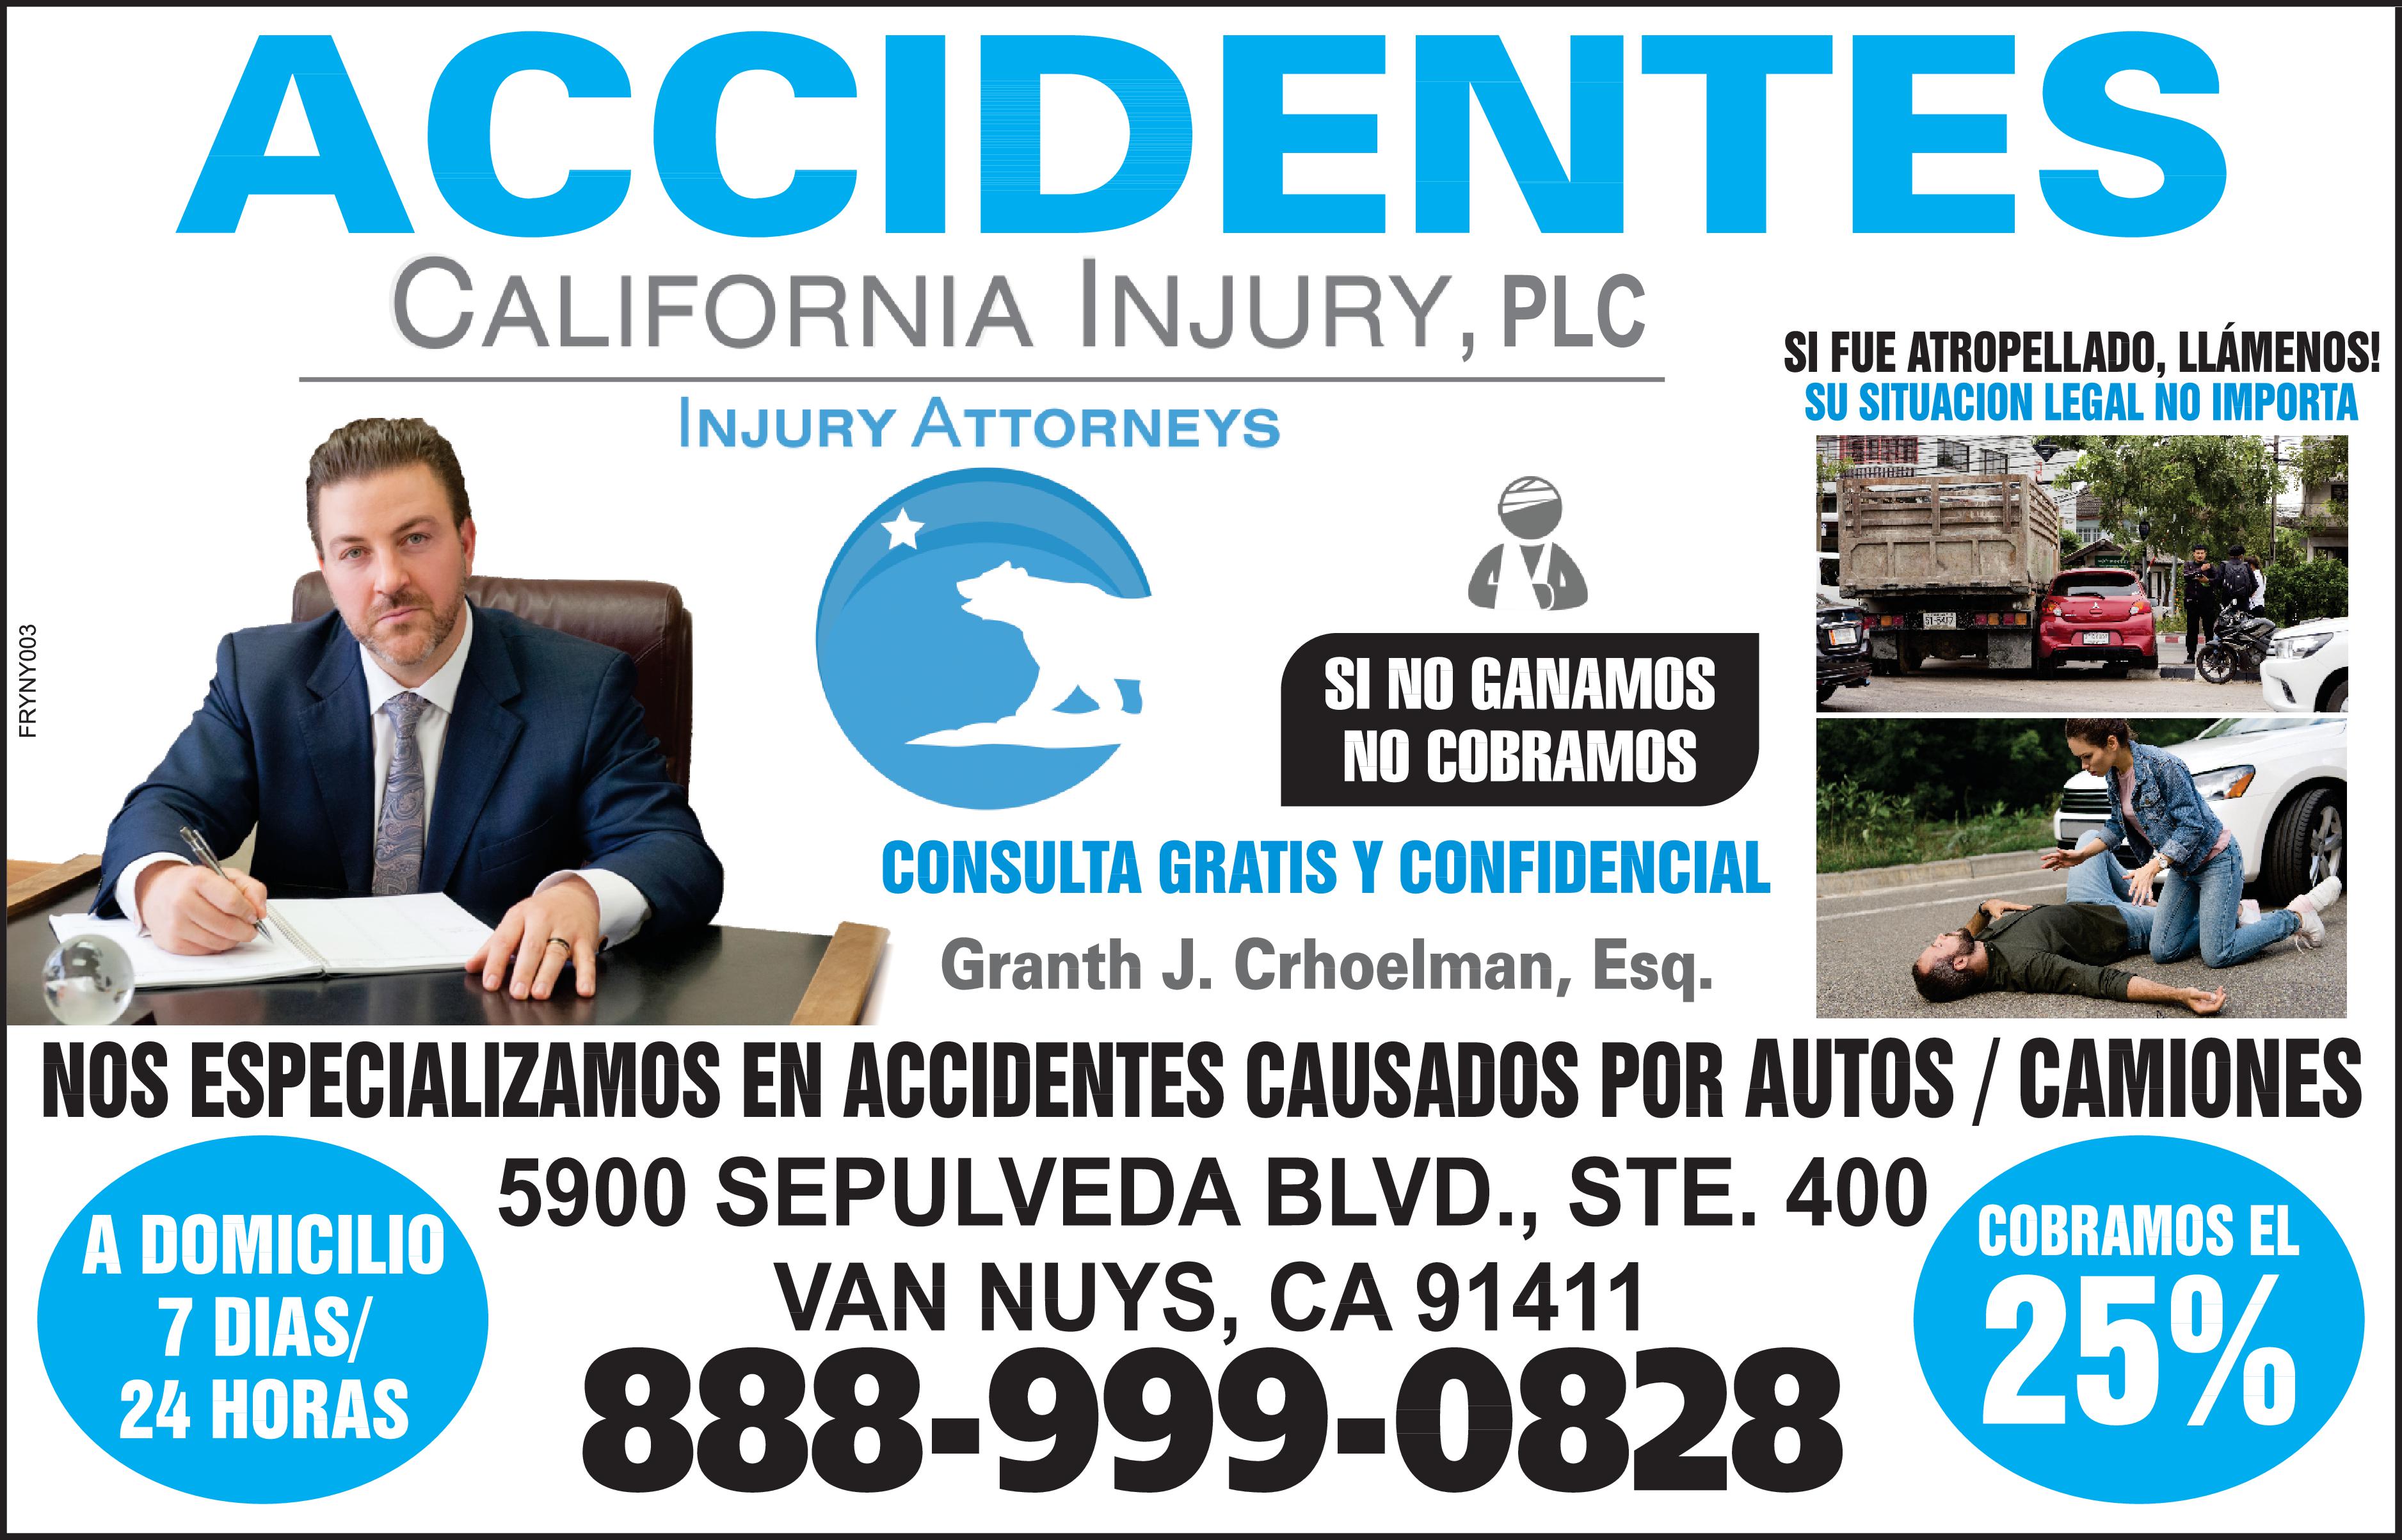 California Injury, PLC